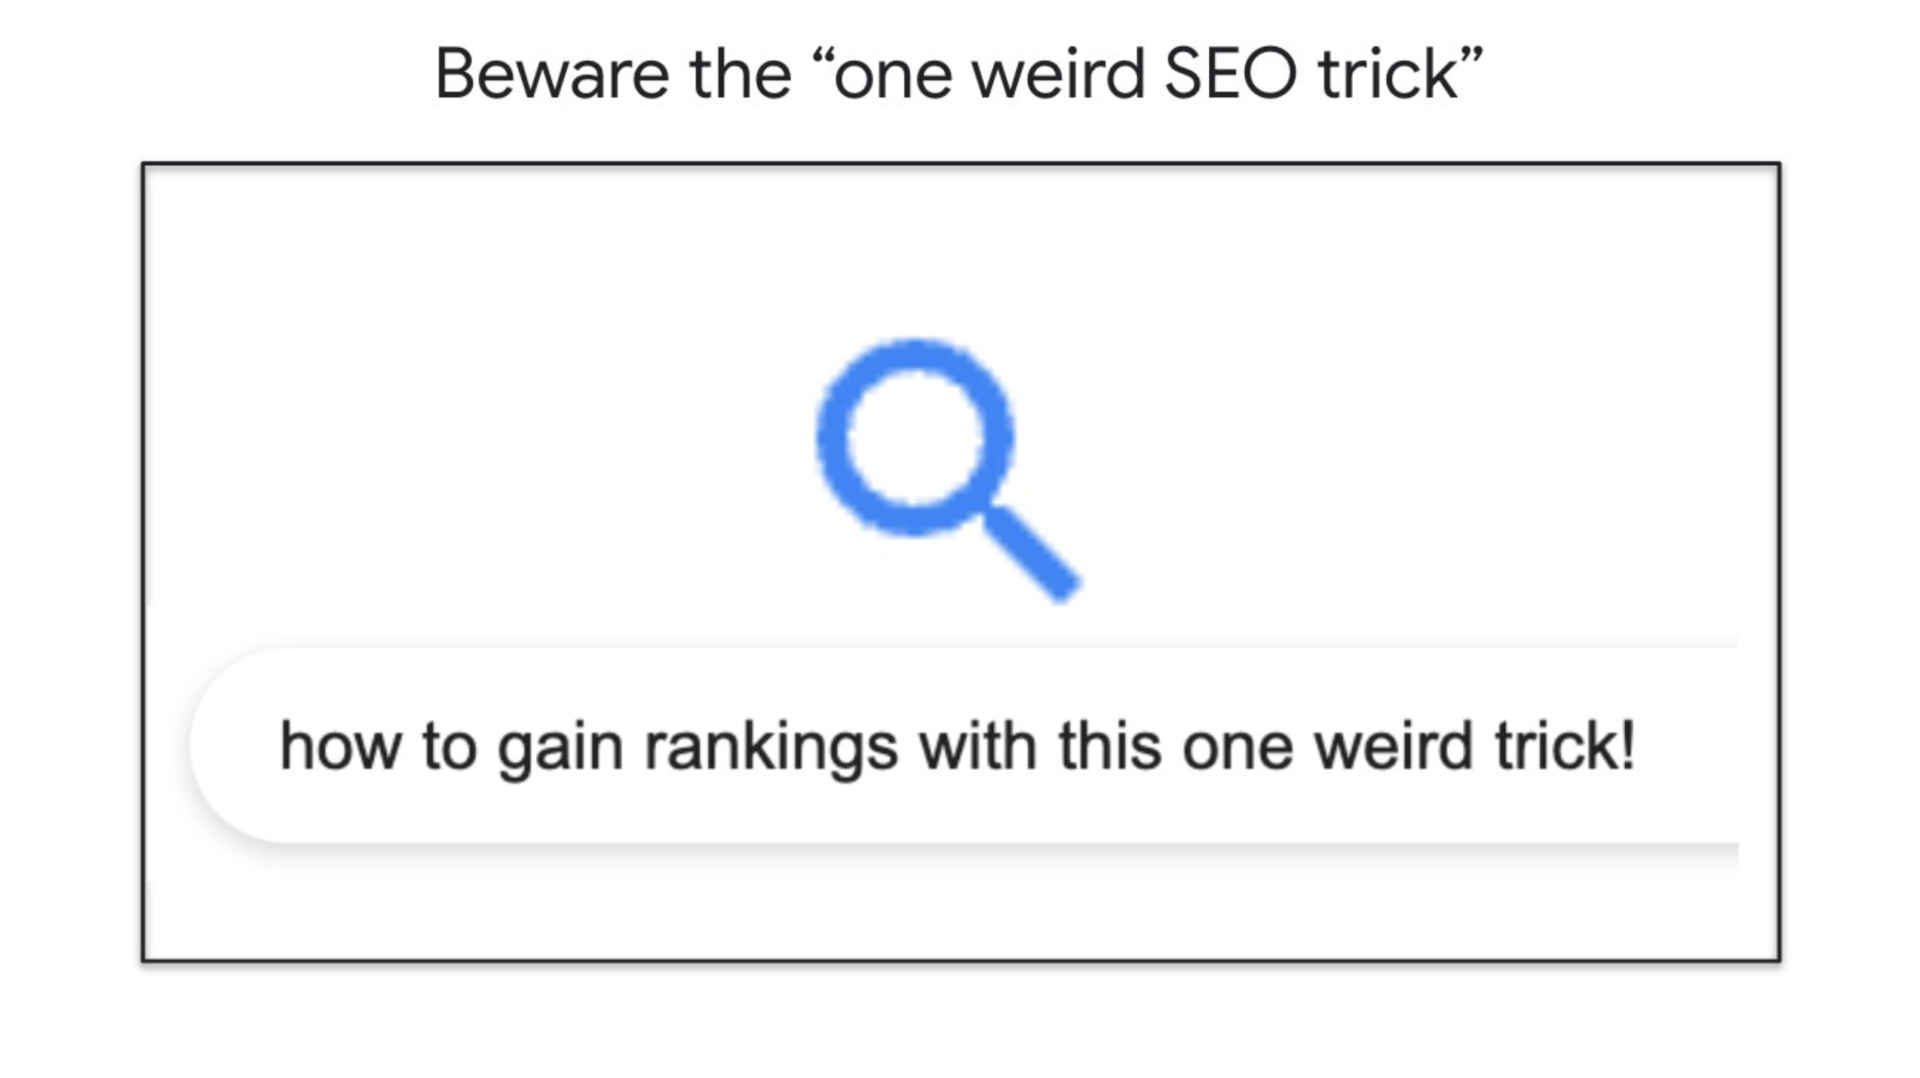 beware the one weird SEO trick